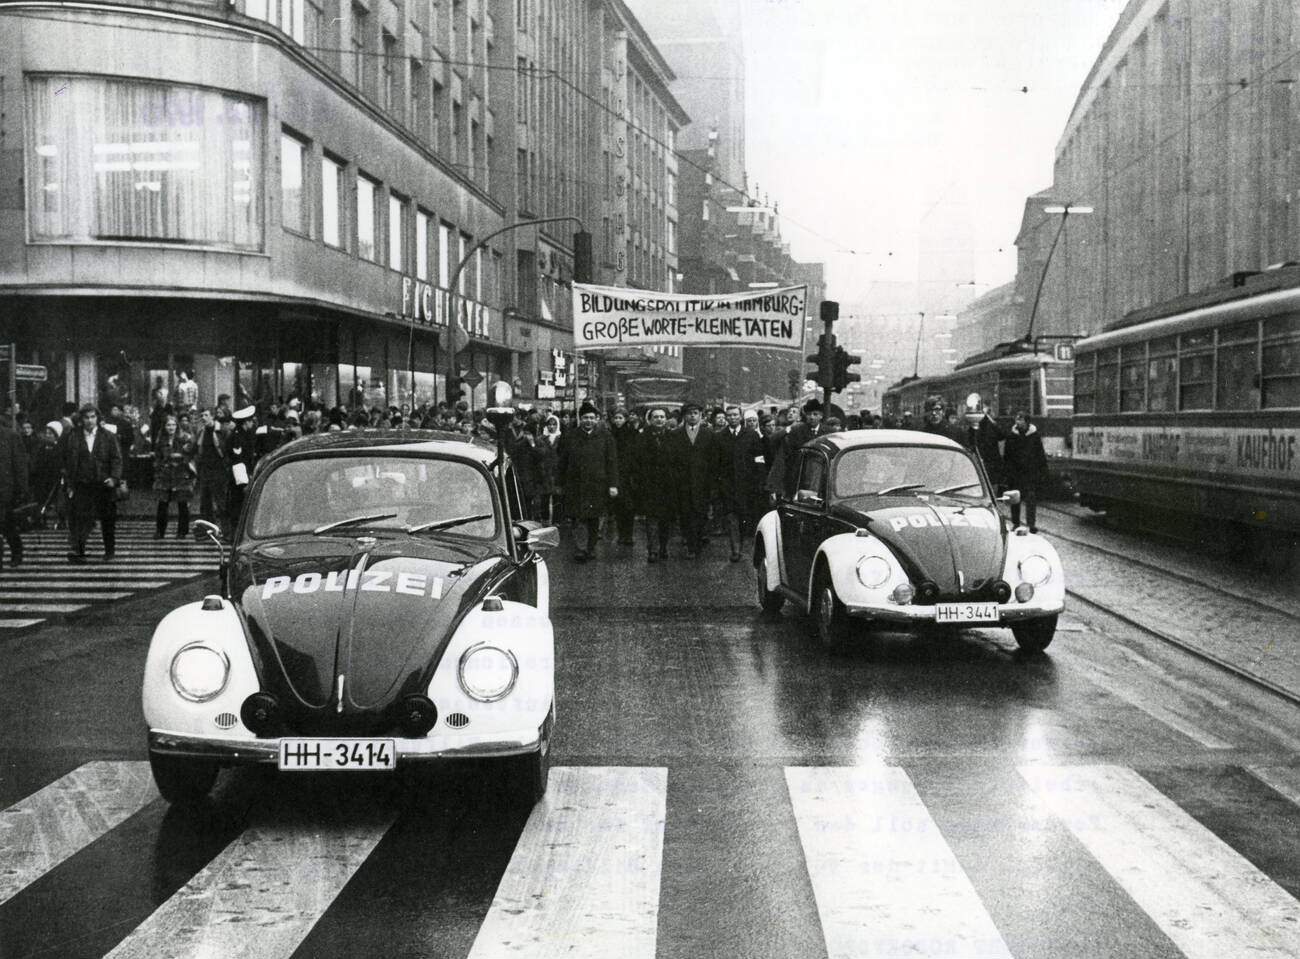 A demonstration of teachers in Hamburg, Germany on February 24, 1970.